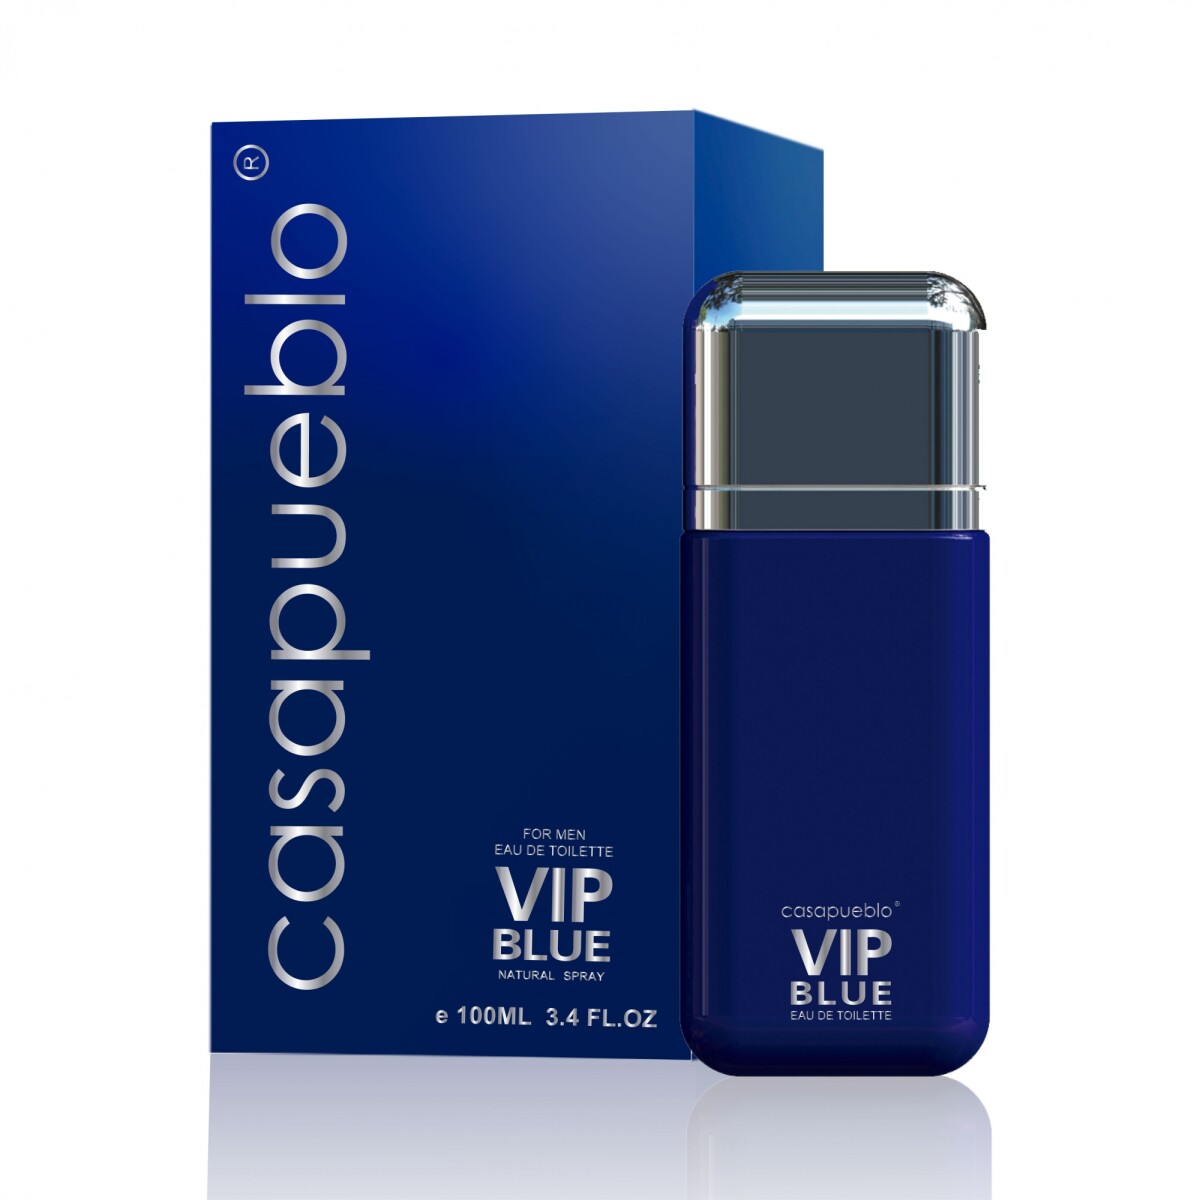 Perfume Casapueblo Vip Blue 100 Ml Men - 001 